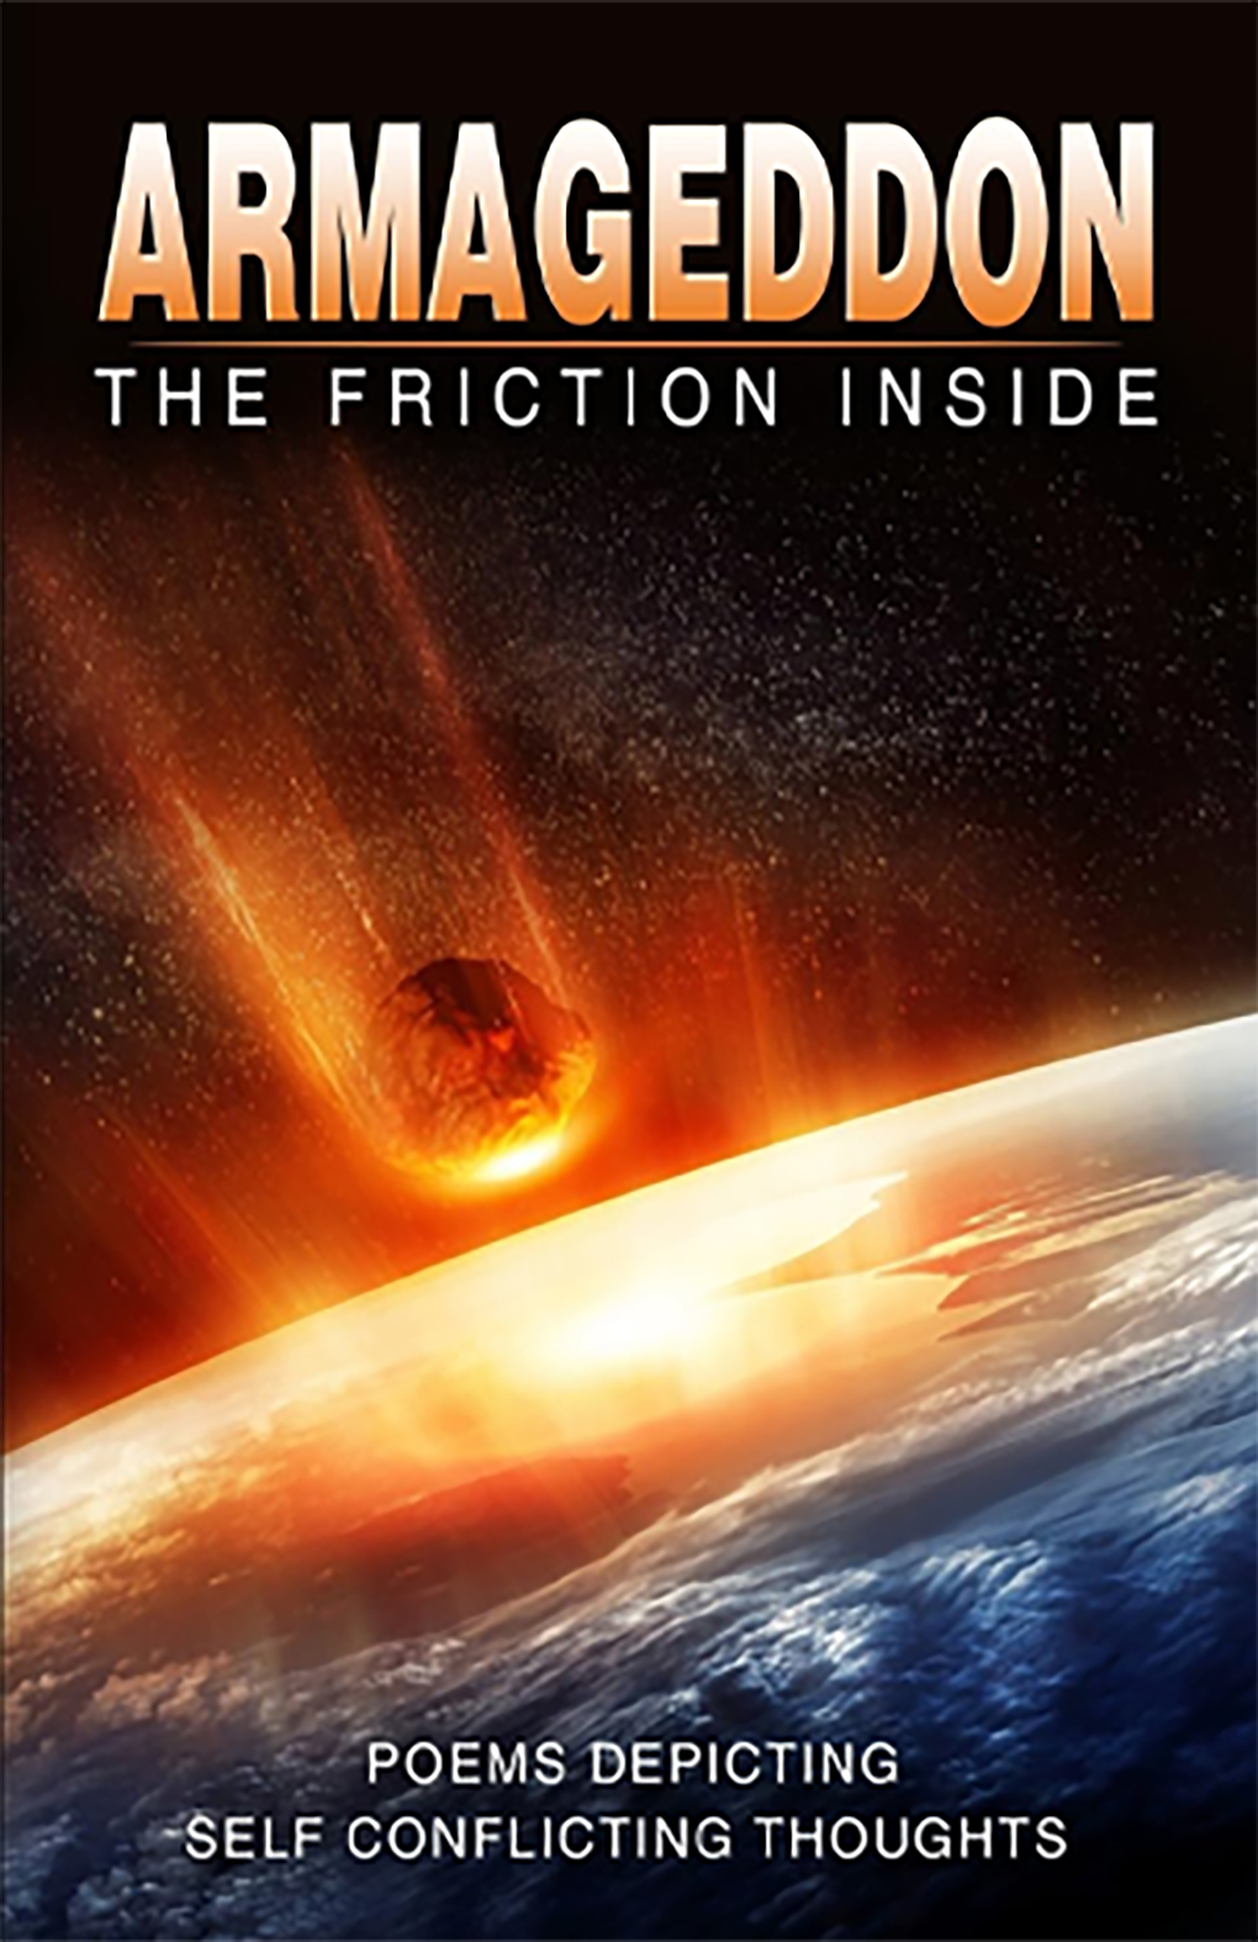 ARMAGEDDON – THE FRICTION INSIDE